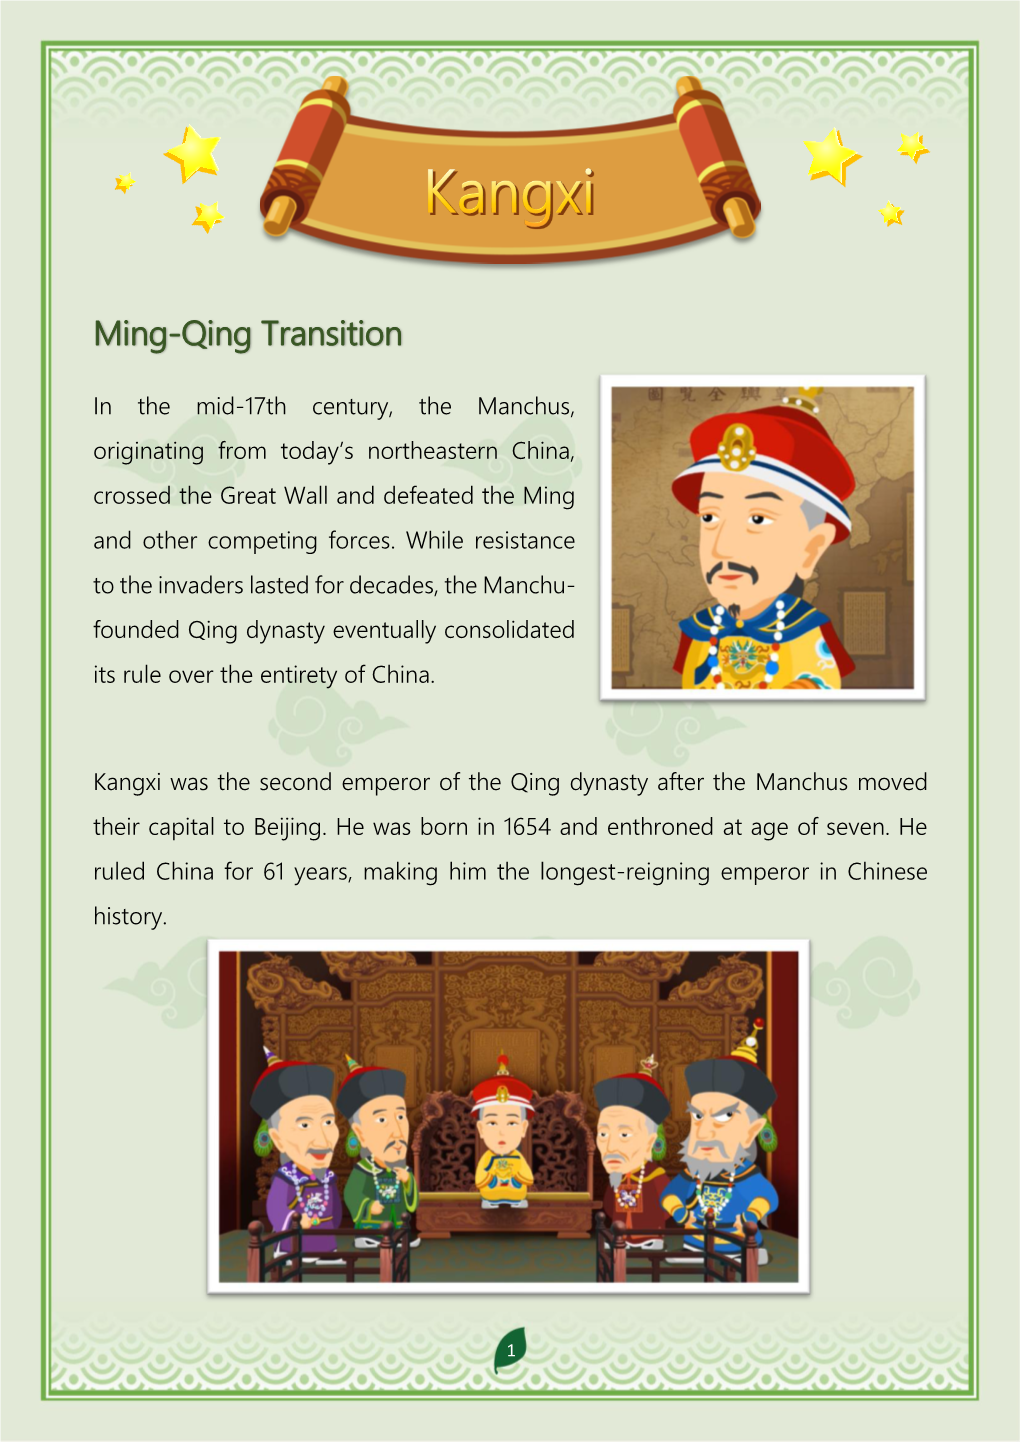 Ming-Qing Transition